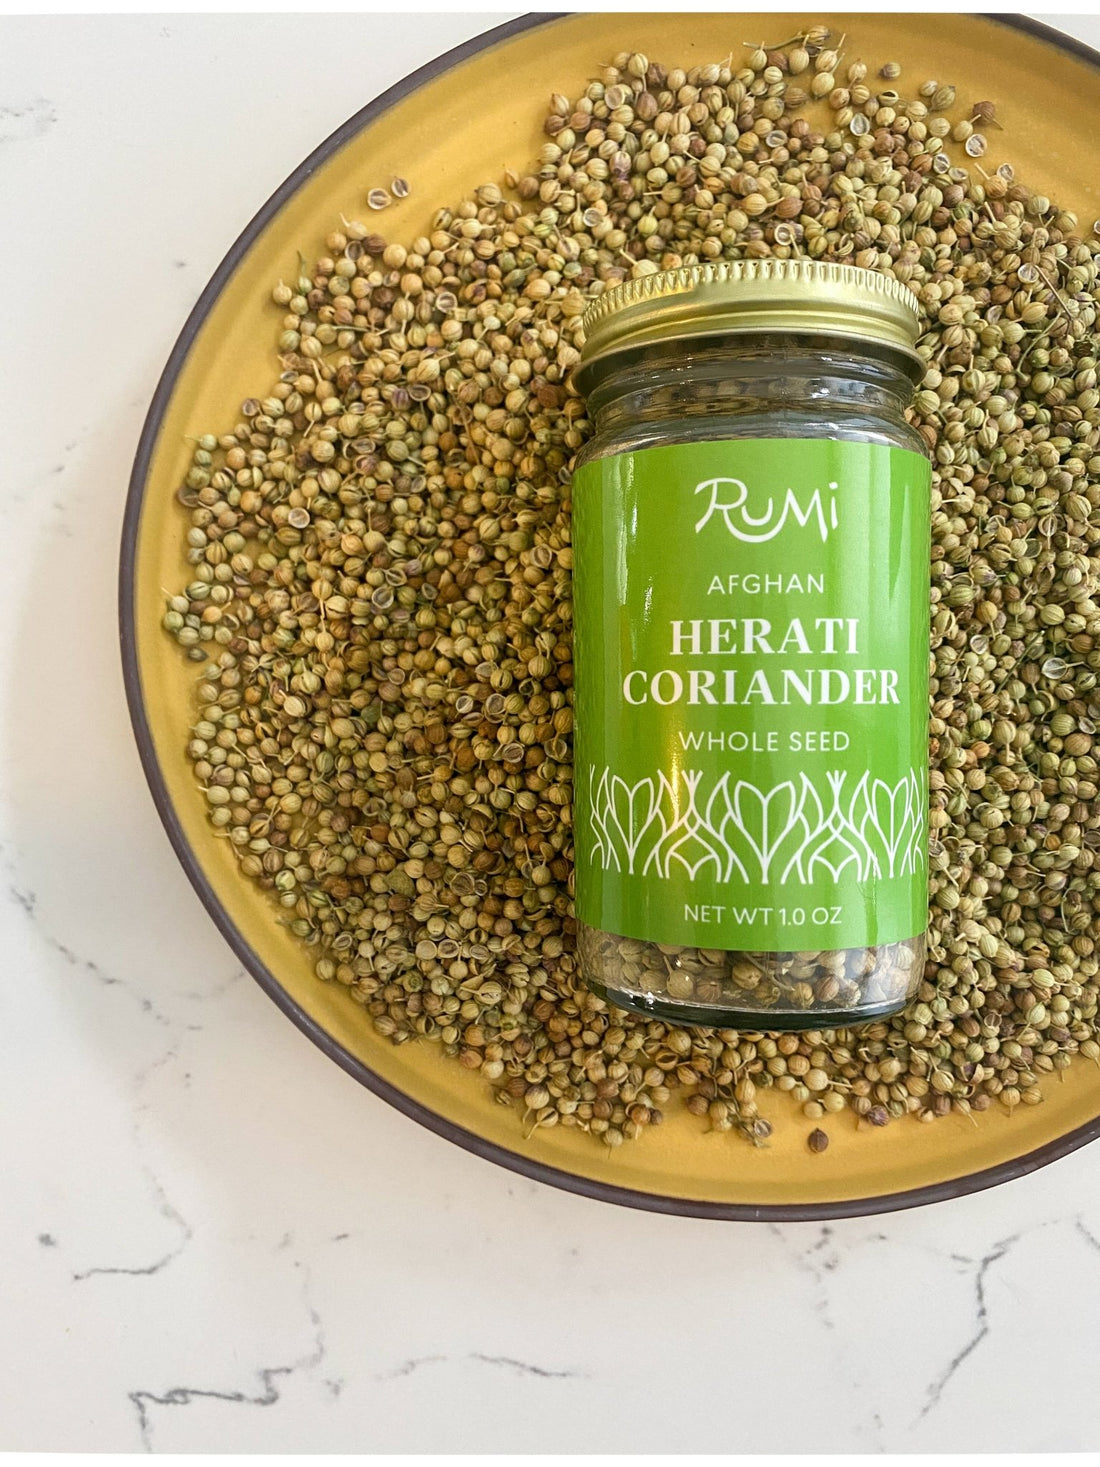 The Rumi Spice Coriander Feature: How To Add Citrusy Coriander To Your Favorite Recipes - Rumi Spice